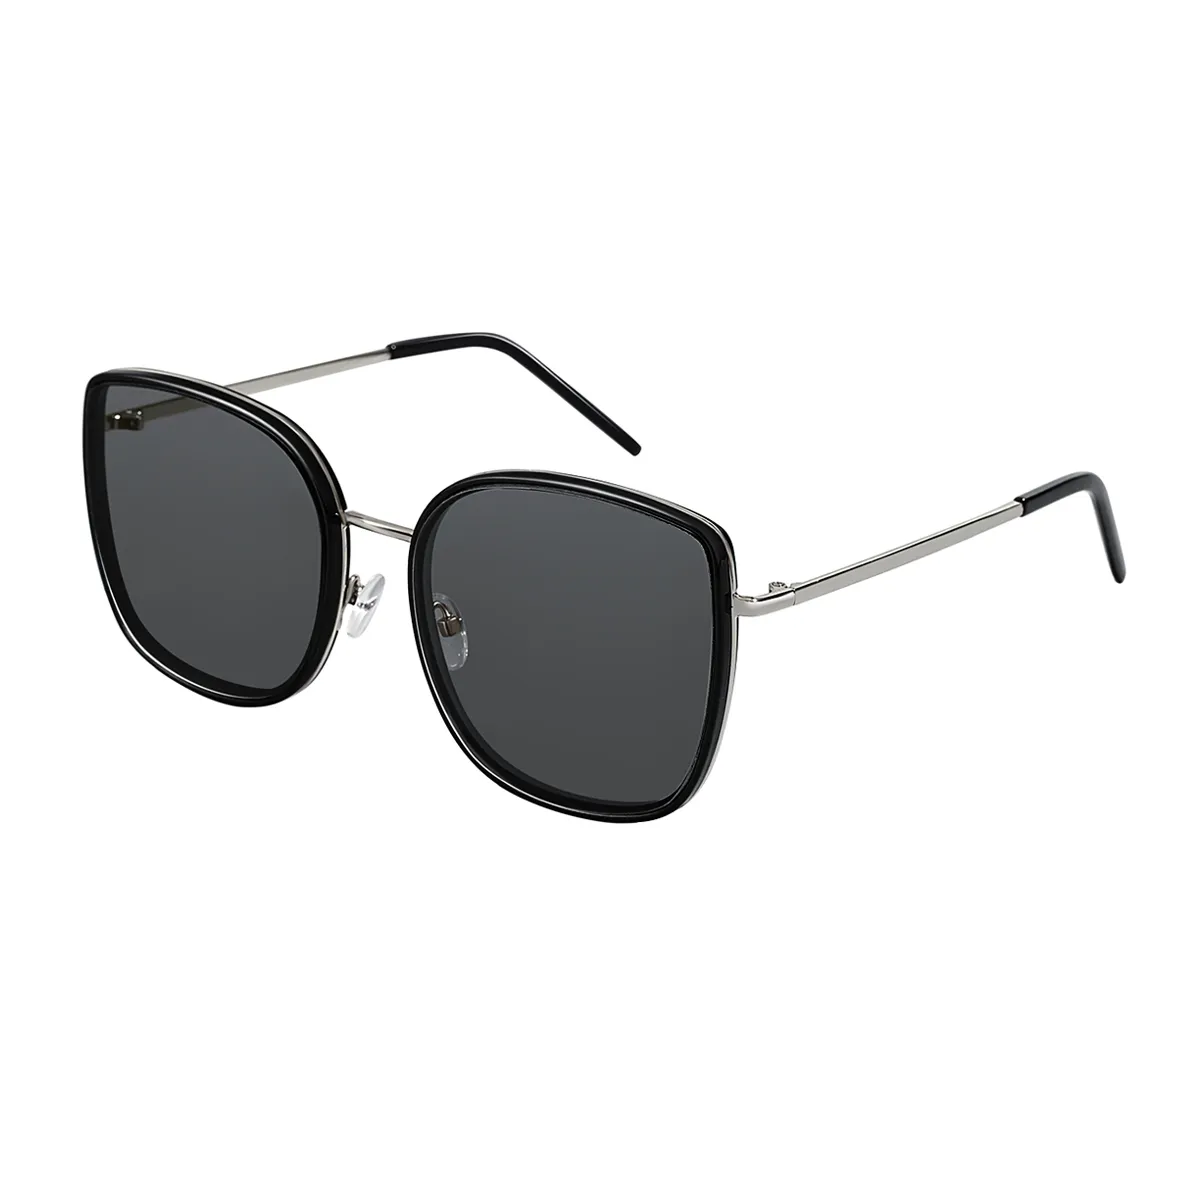 Hannah - Square Black Sunglasses for Women